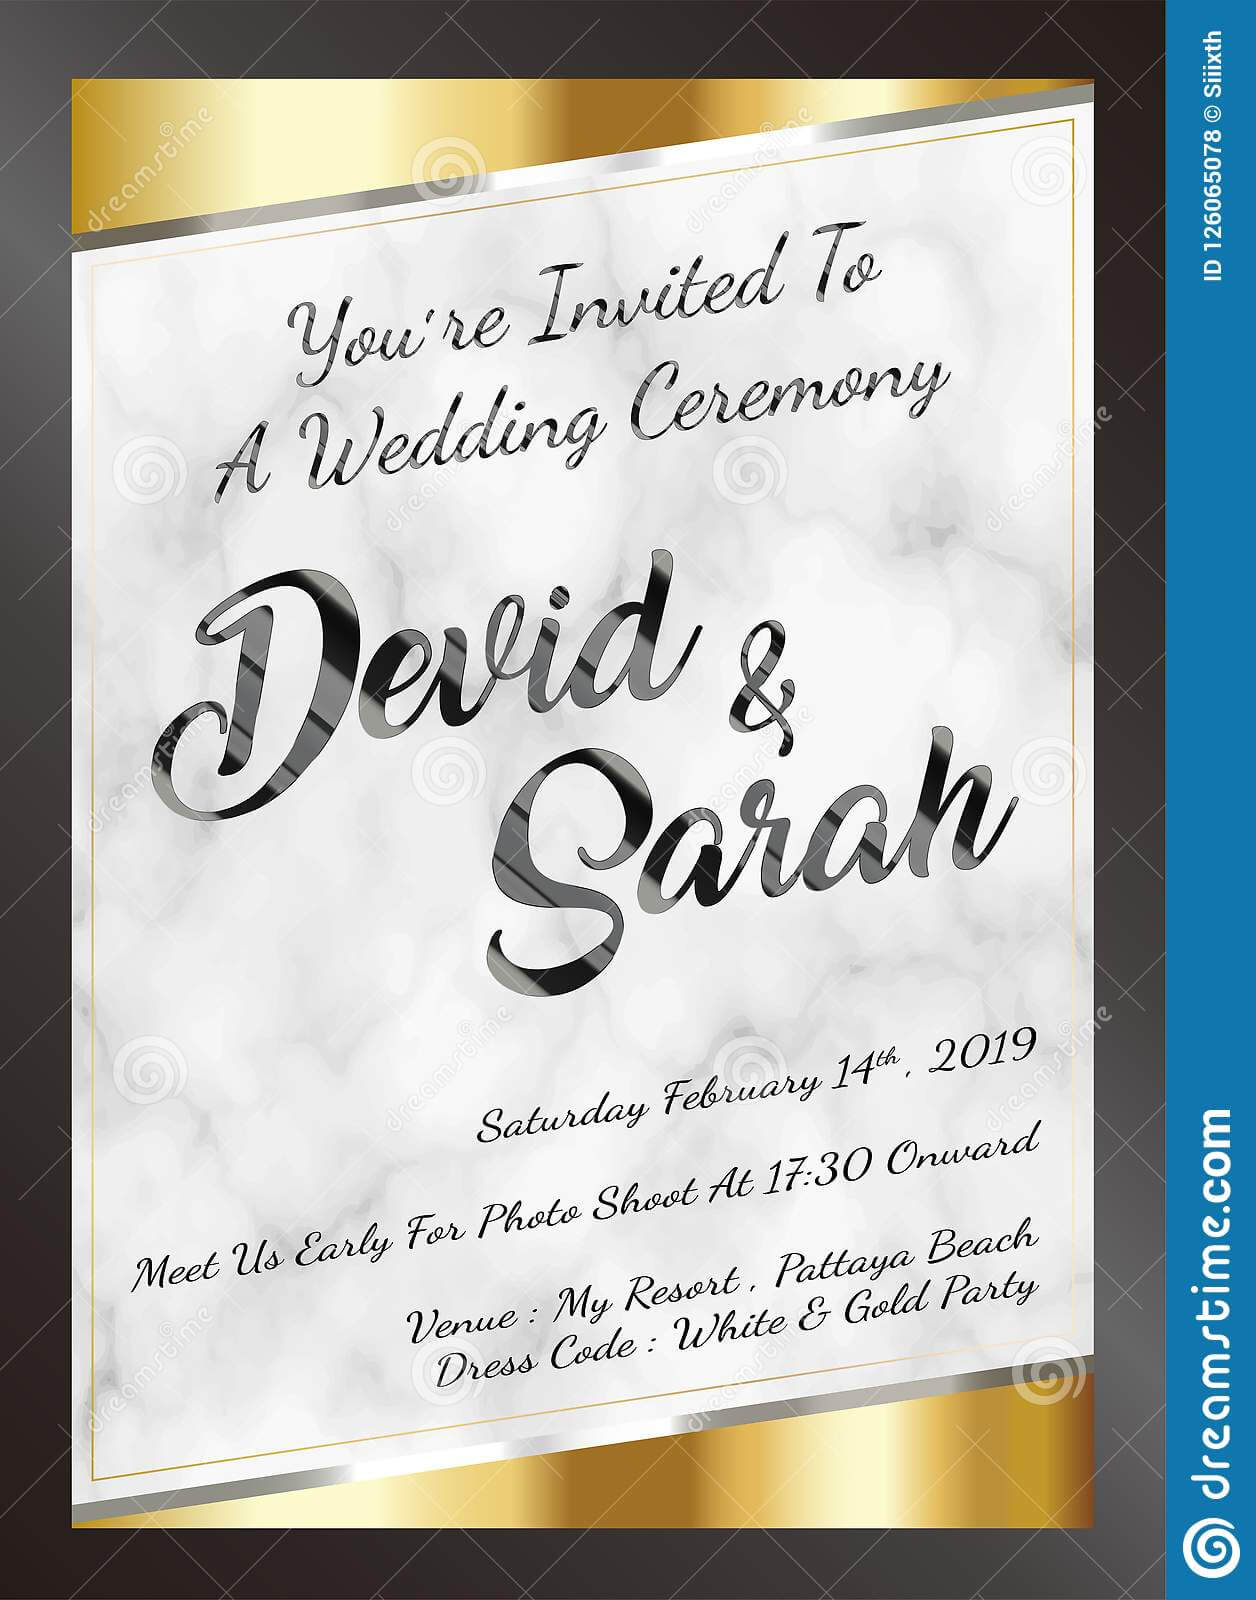 Sample Wedding Card Invitation Template Vector Eps Stock With Sample Wedding Invitation Cards Templates